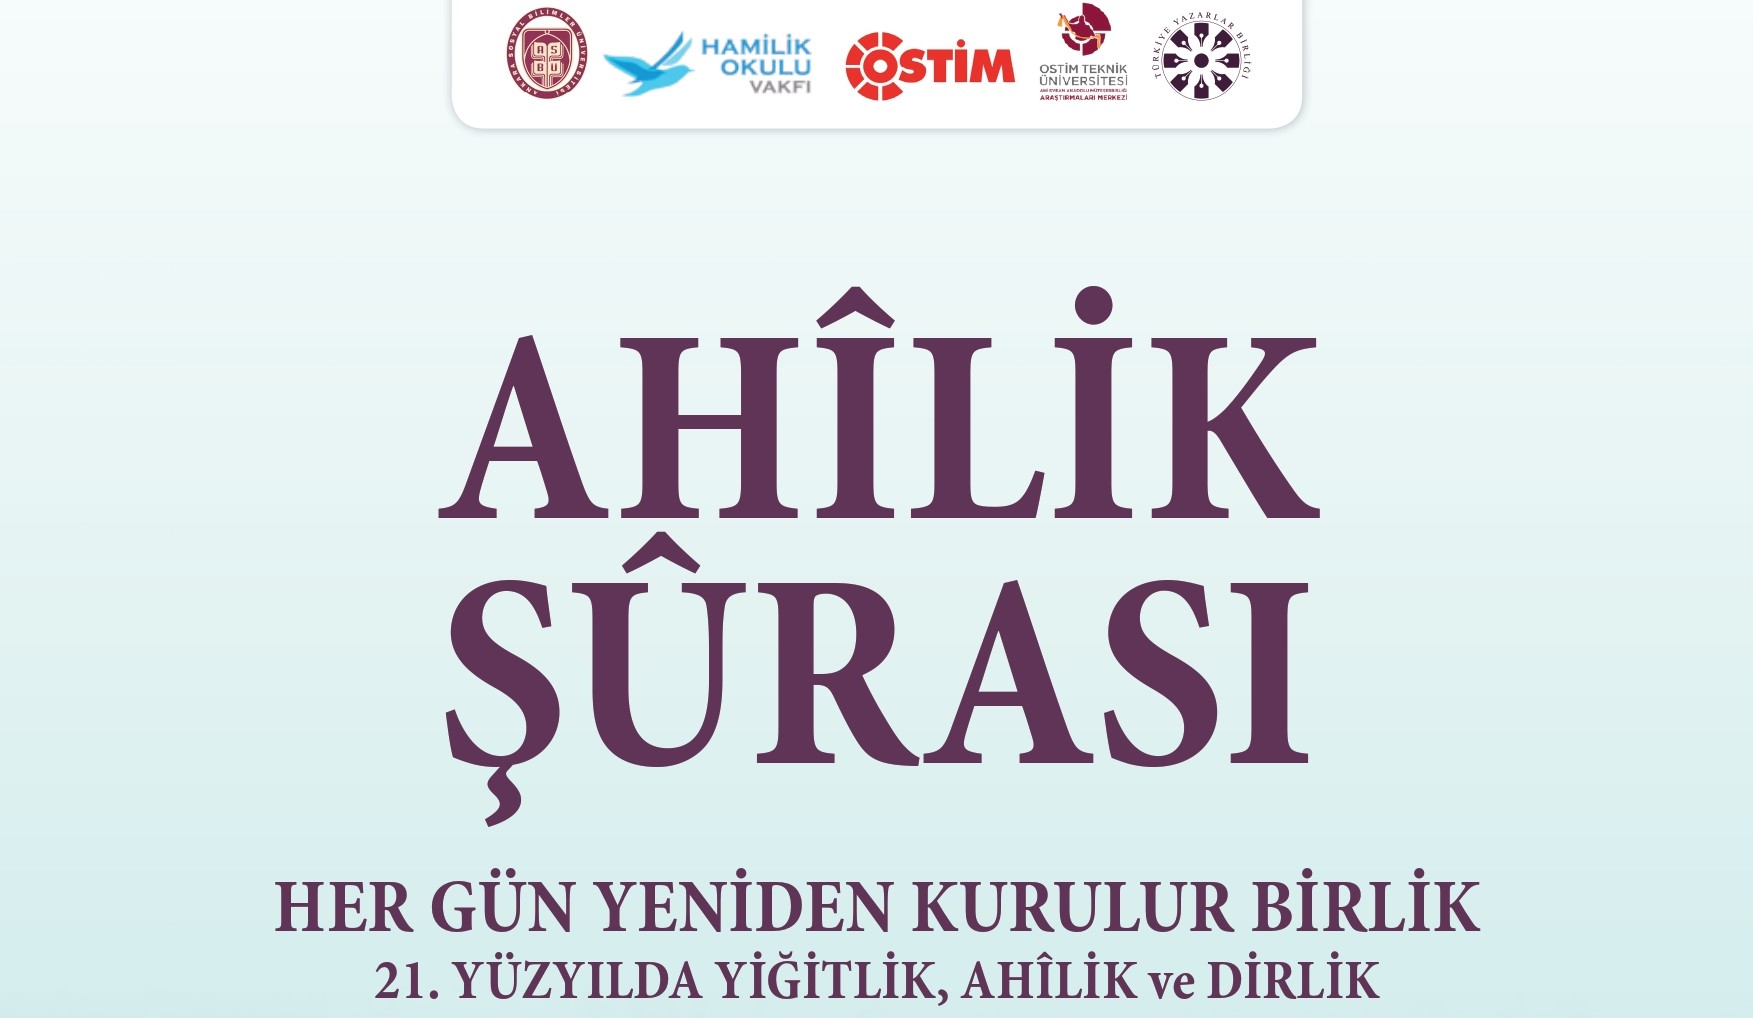 Ankara’da “Ahîlik Şûrası” düzenlenecek